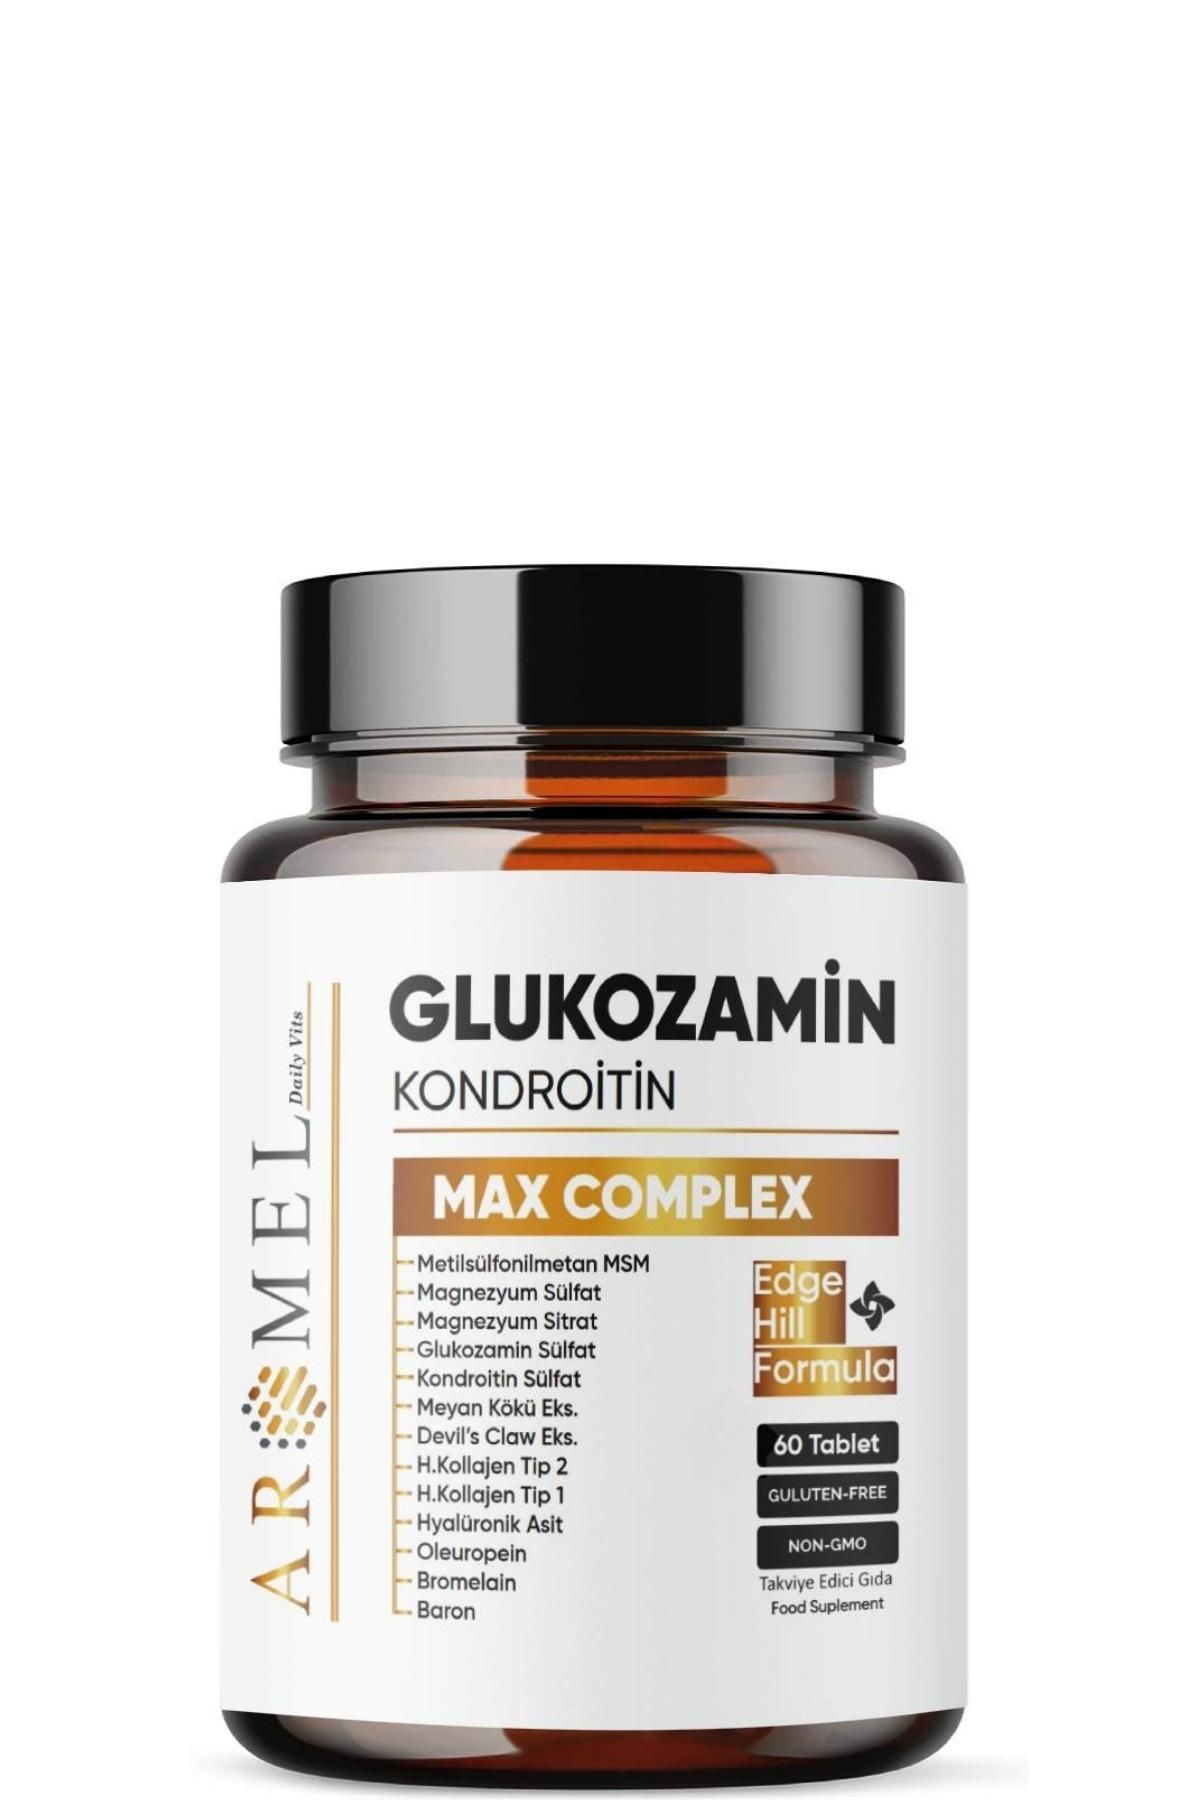 Aromel Glukozamin Kondroitin Msm, Max Complex | 60 Tablet | UK Formül, Boswellia,Bromelain,Oleuropein